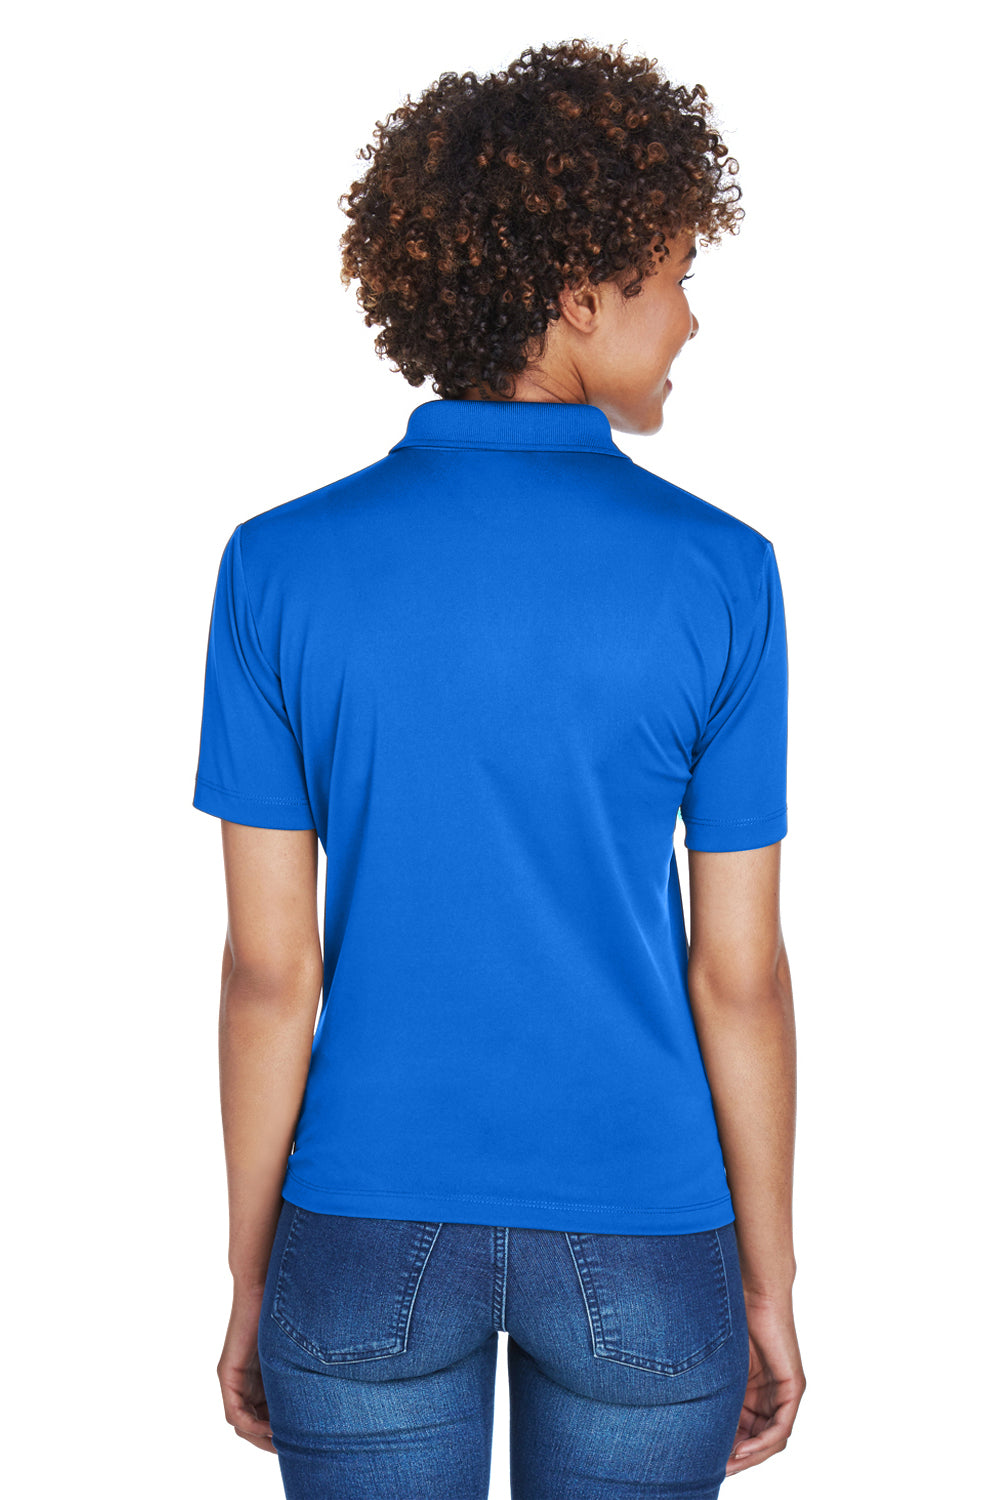 UltraClub 8610L Womens Cool & Dry 8 Star Elite Performance Moisture Wicking Short Sleeve Polo Shirt Royal Blue Back